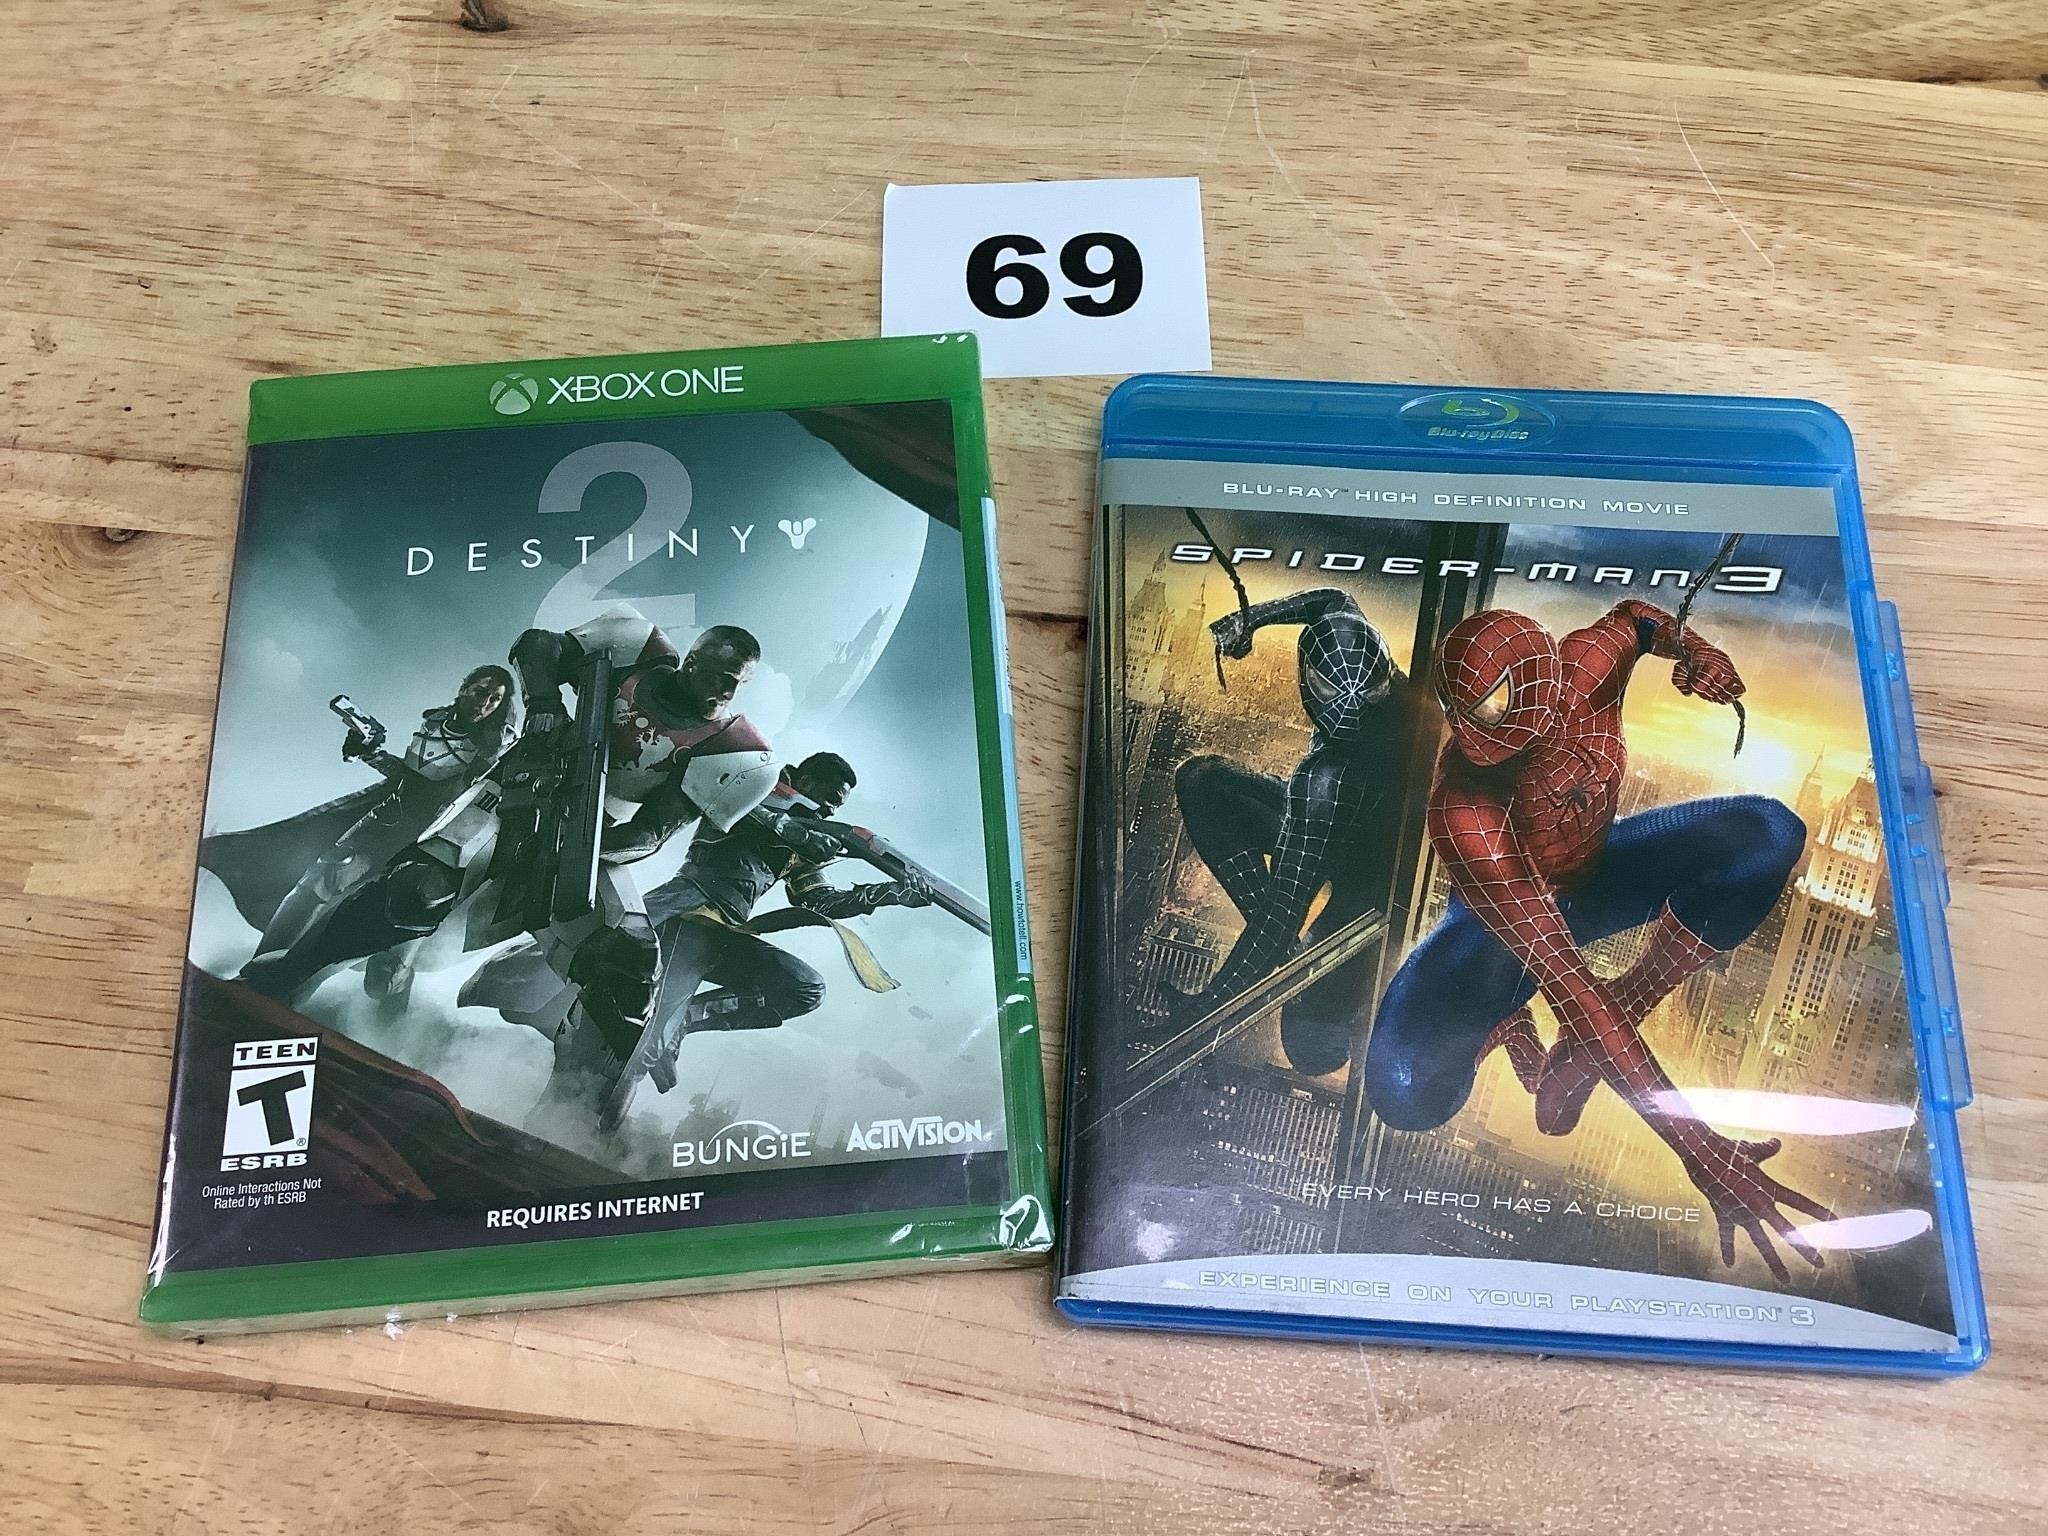 Destiny 2 for Xbox One & Spider-Man 3 Blueray